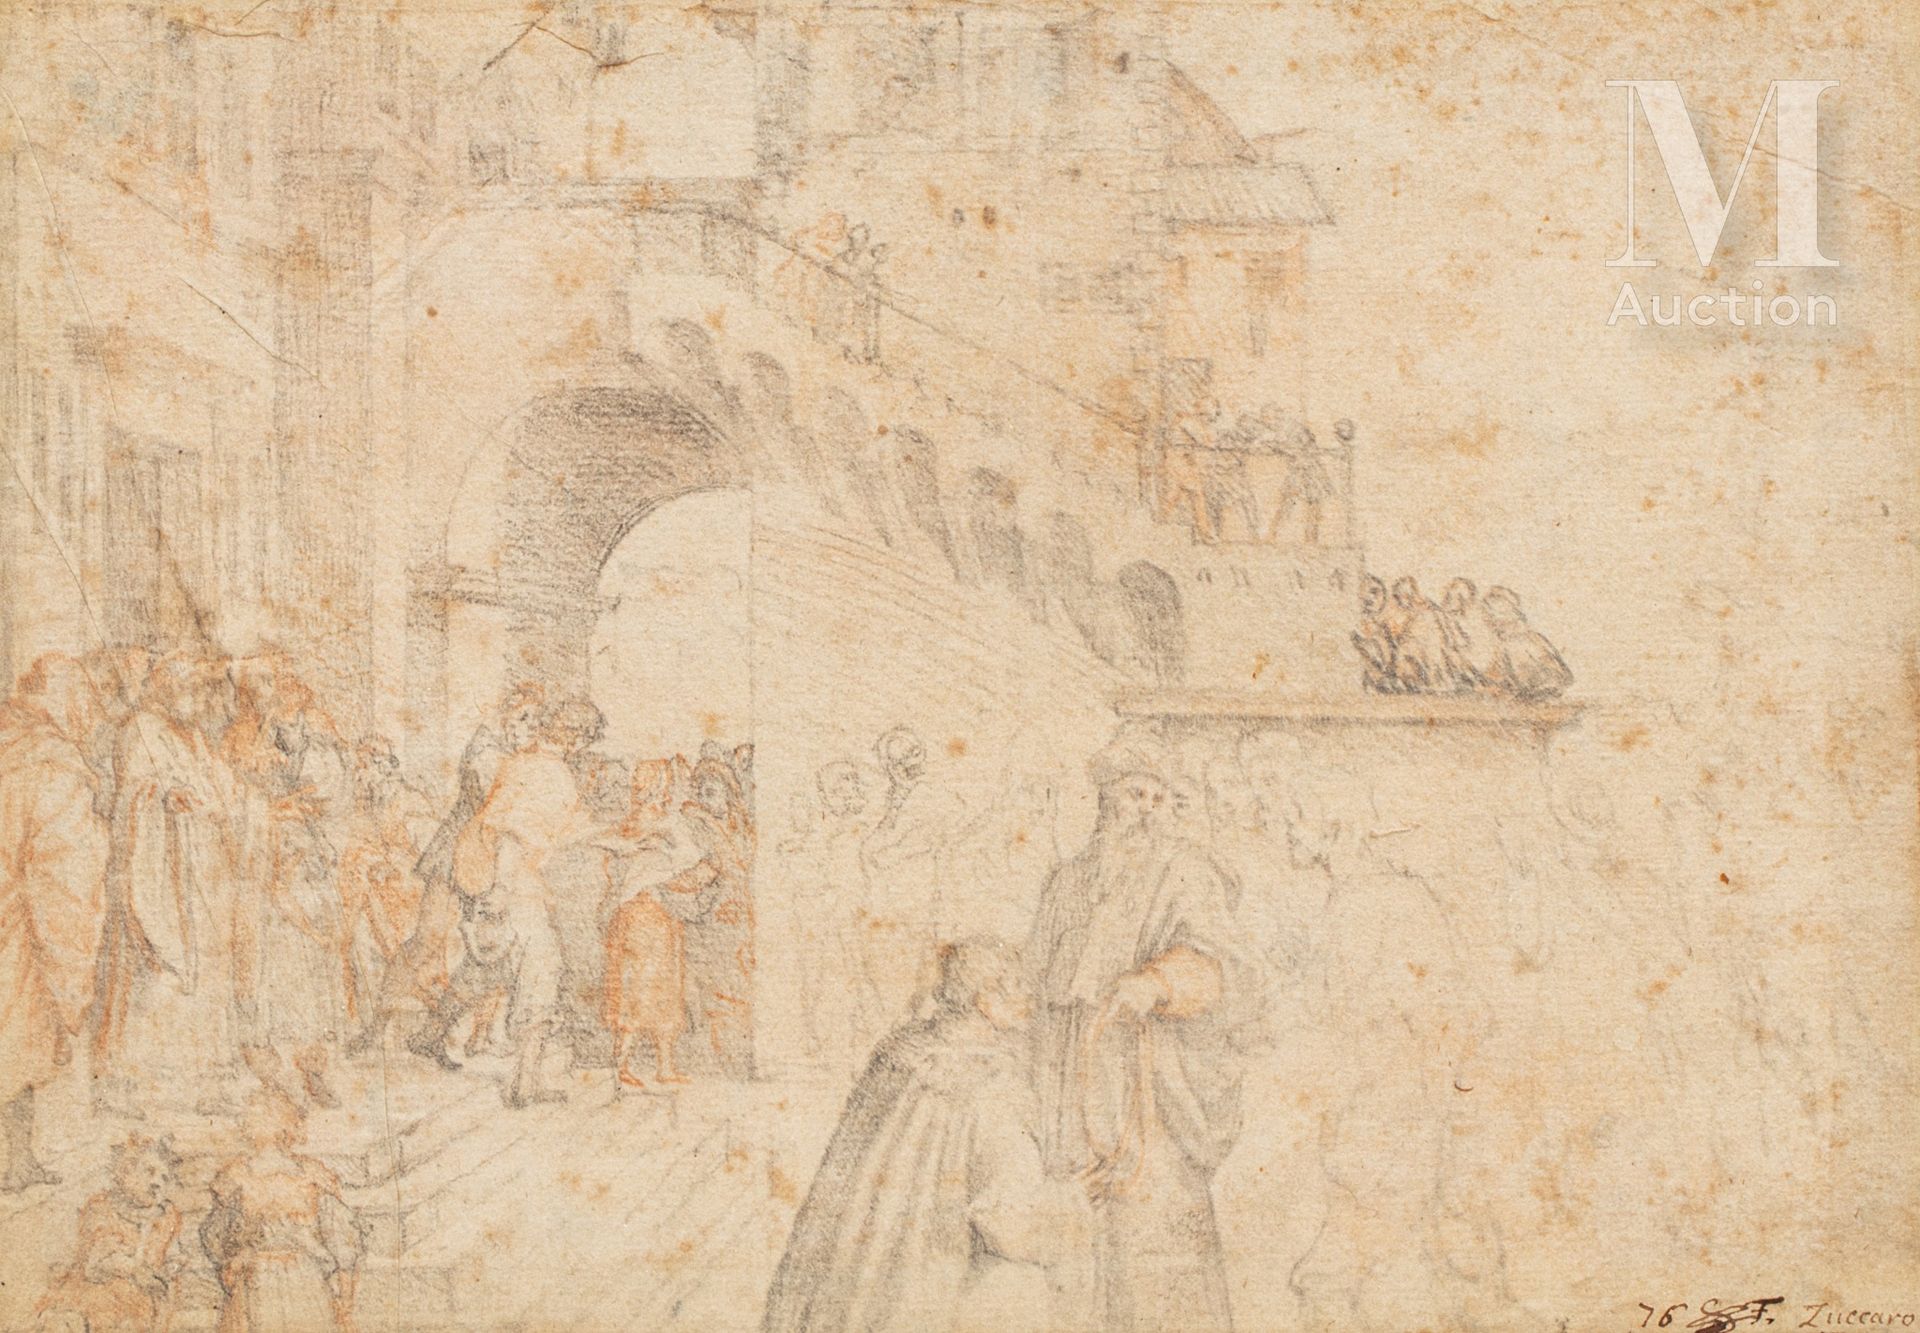 Frederico ZUCCARO (1542 - 1609) 宫殿中的人物

炭笔画

右下方有签名

23,5 x 16,5 cm

(弯曲、点蚀)